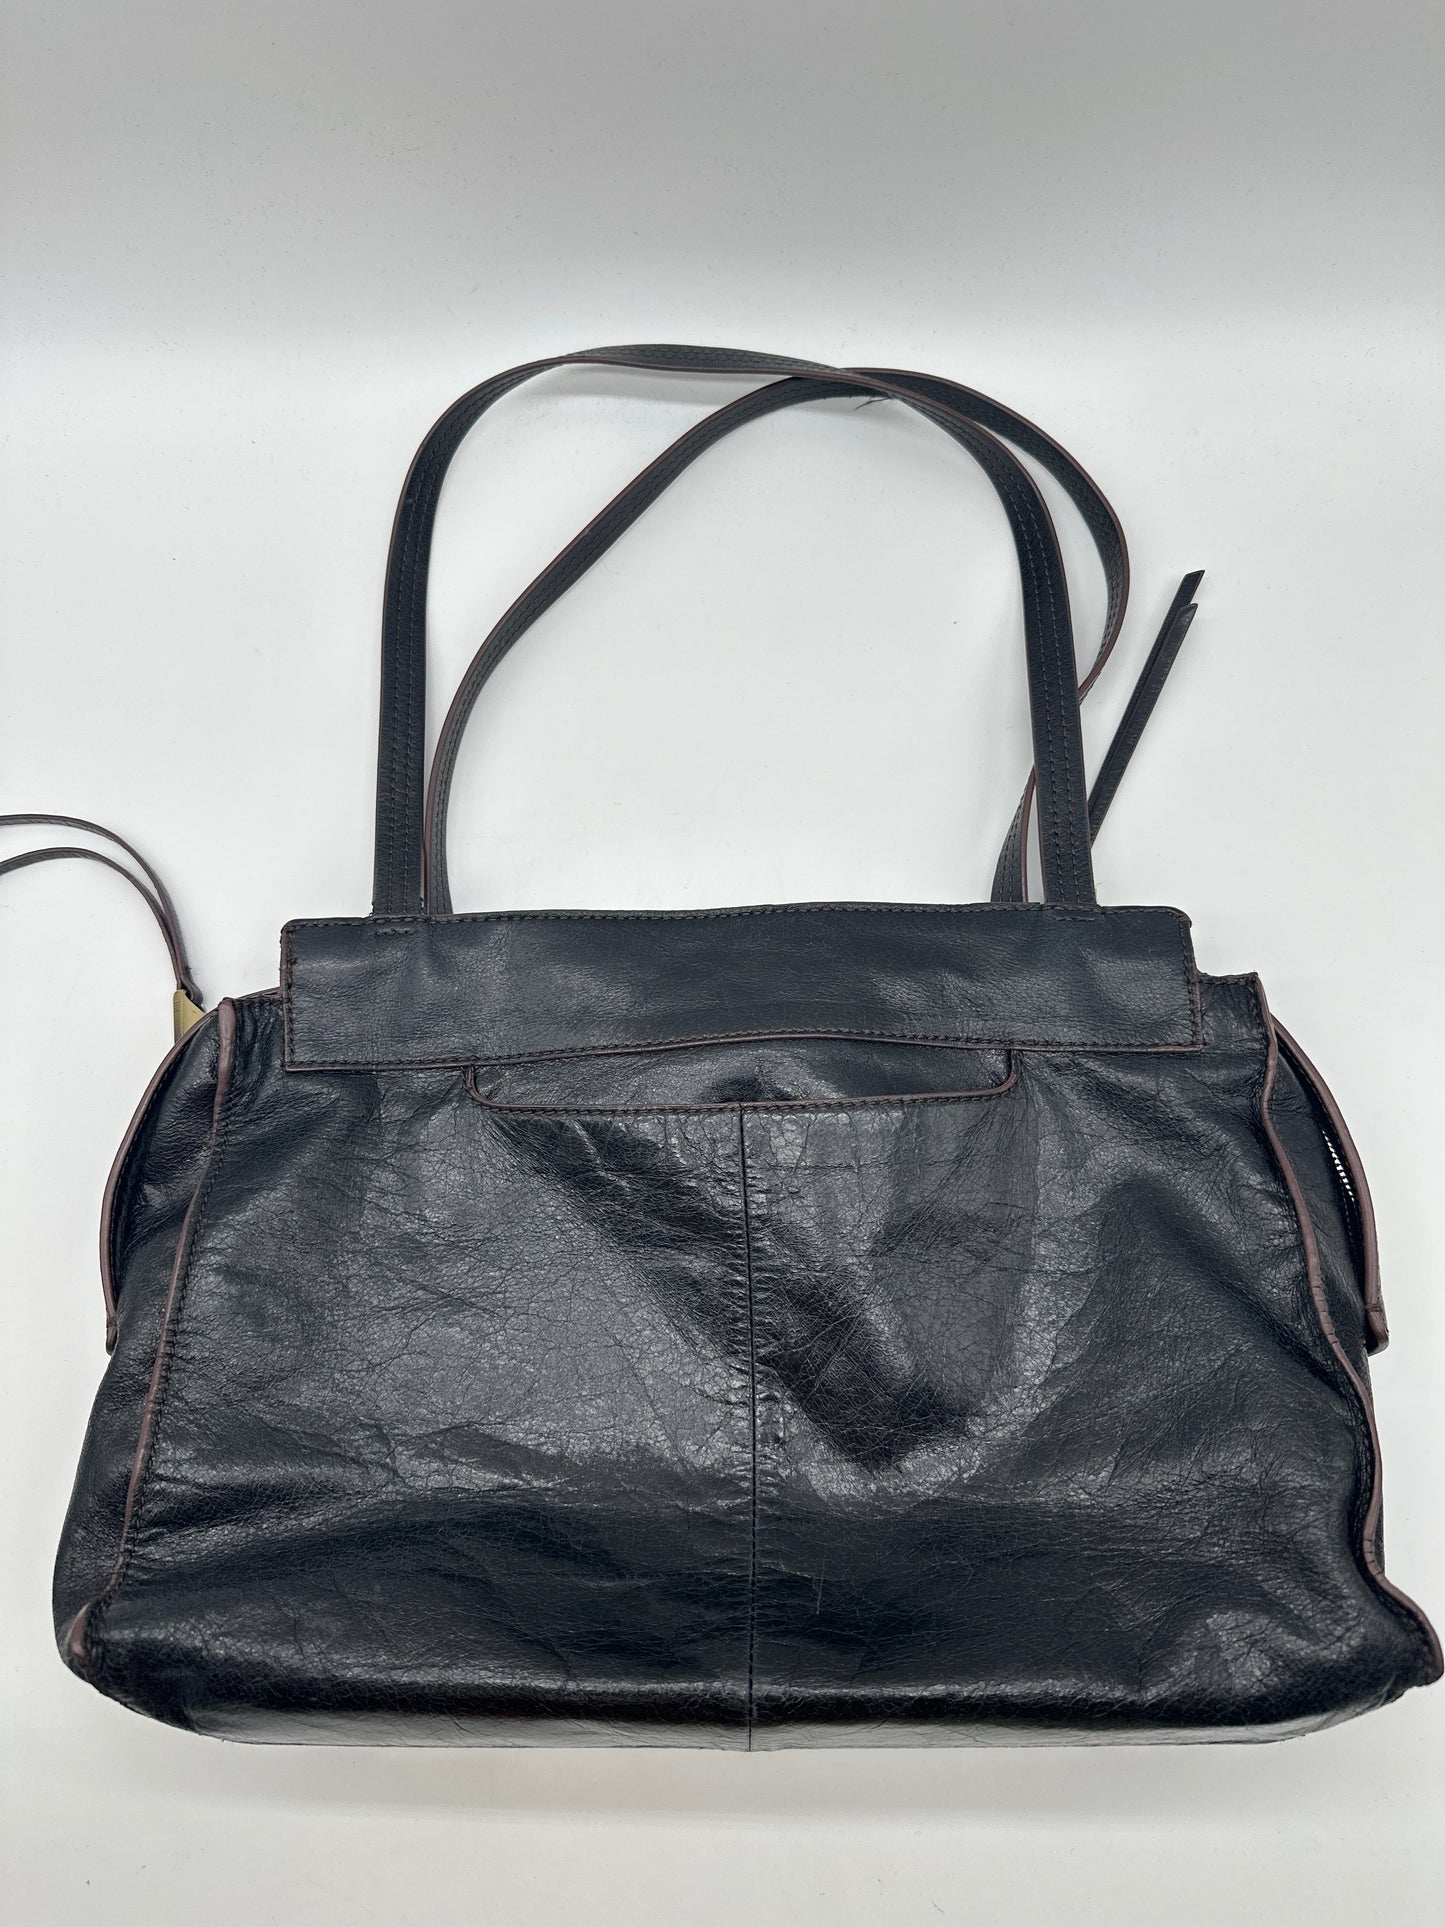 Handbag Designer By Hobo Intl  Size: Small